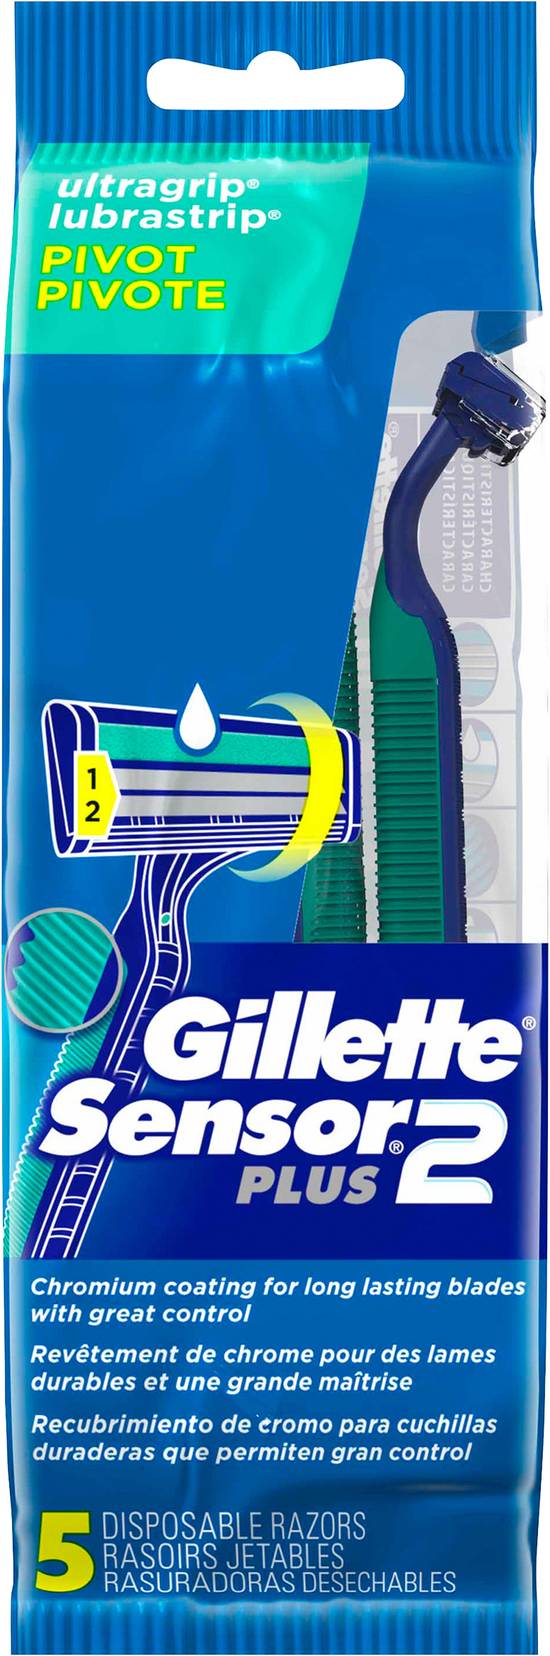 Gillette Sensor 2 Plus Ultagrip Disposable Razors (5 ct)